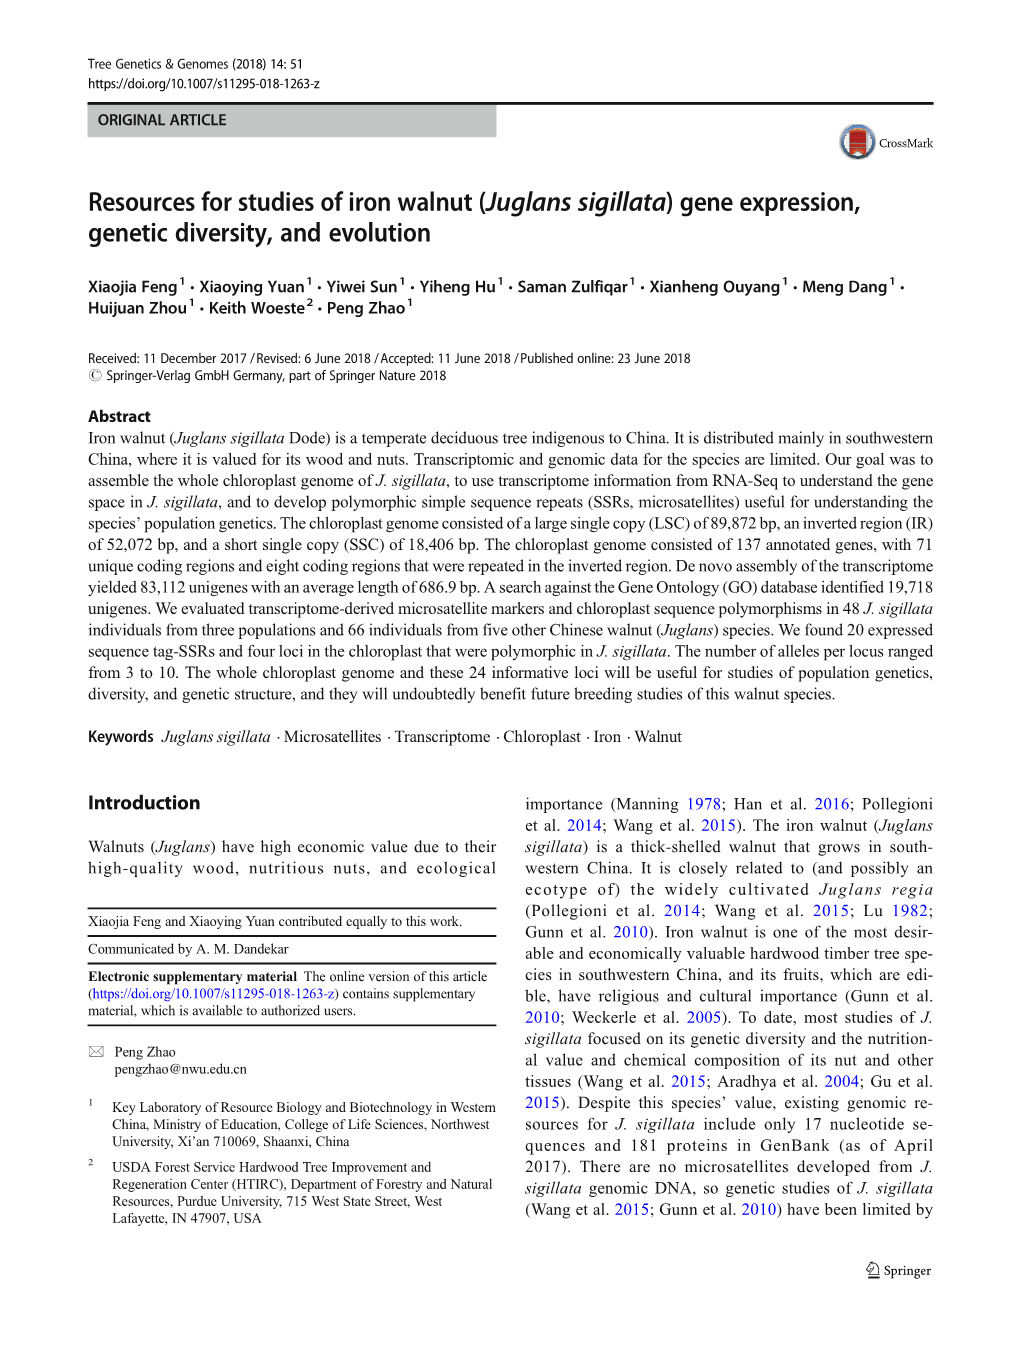 Juglans Sigillata) Gene Expression, Genetic Diversity, and Evolution